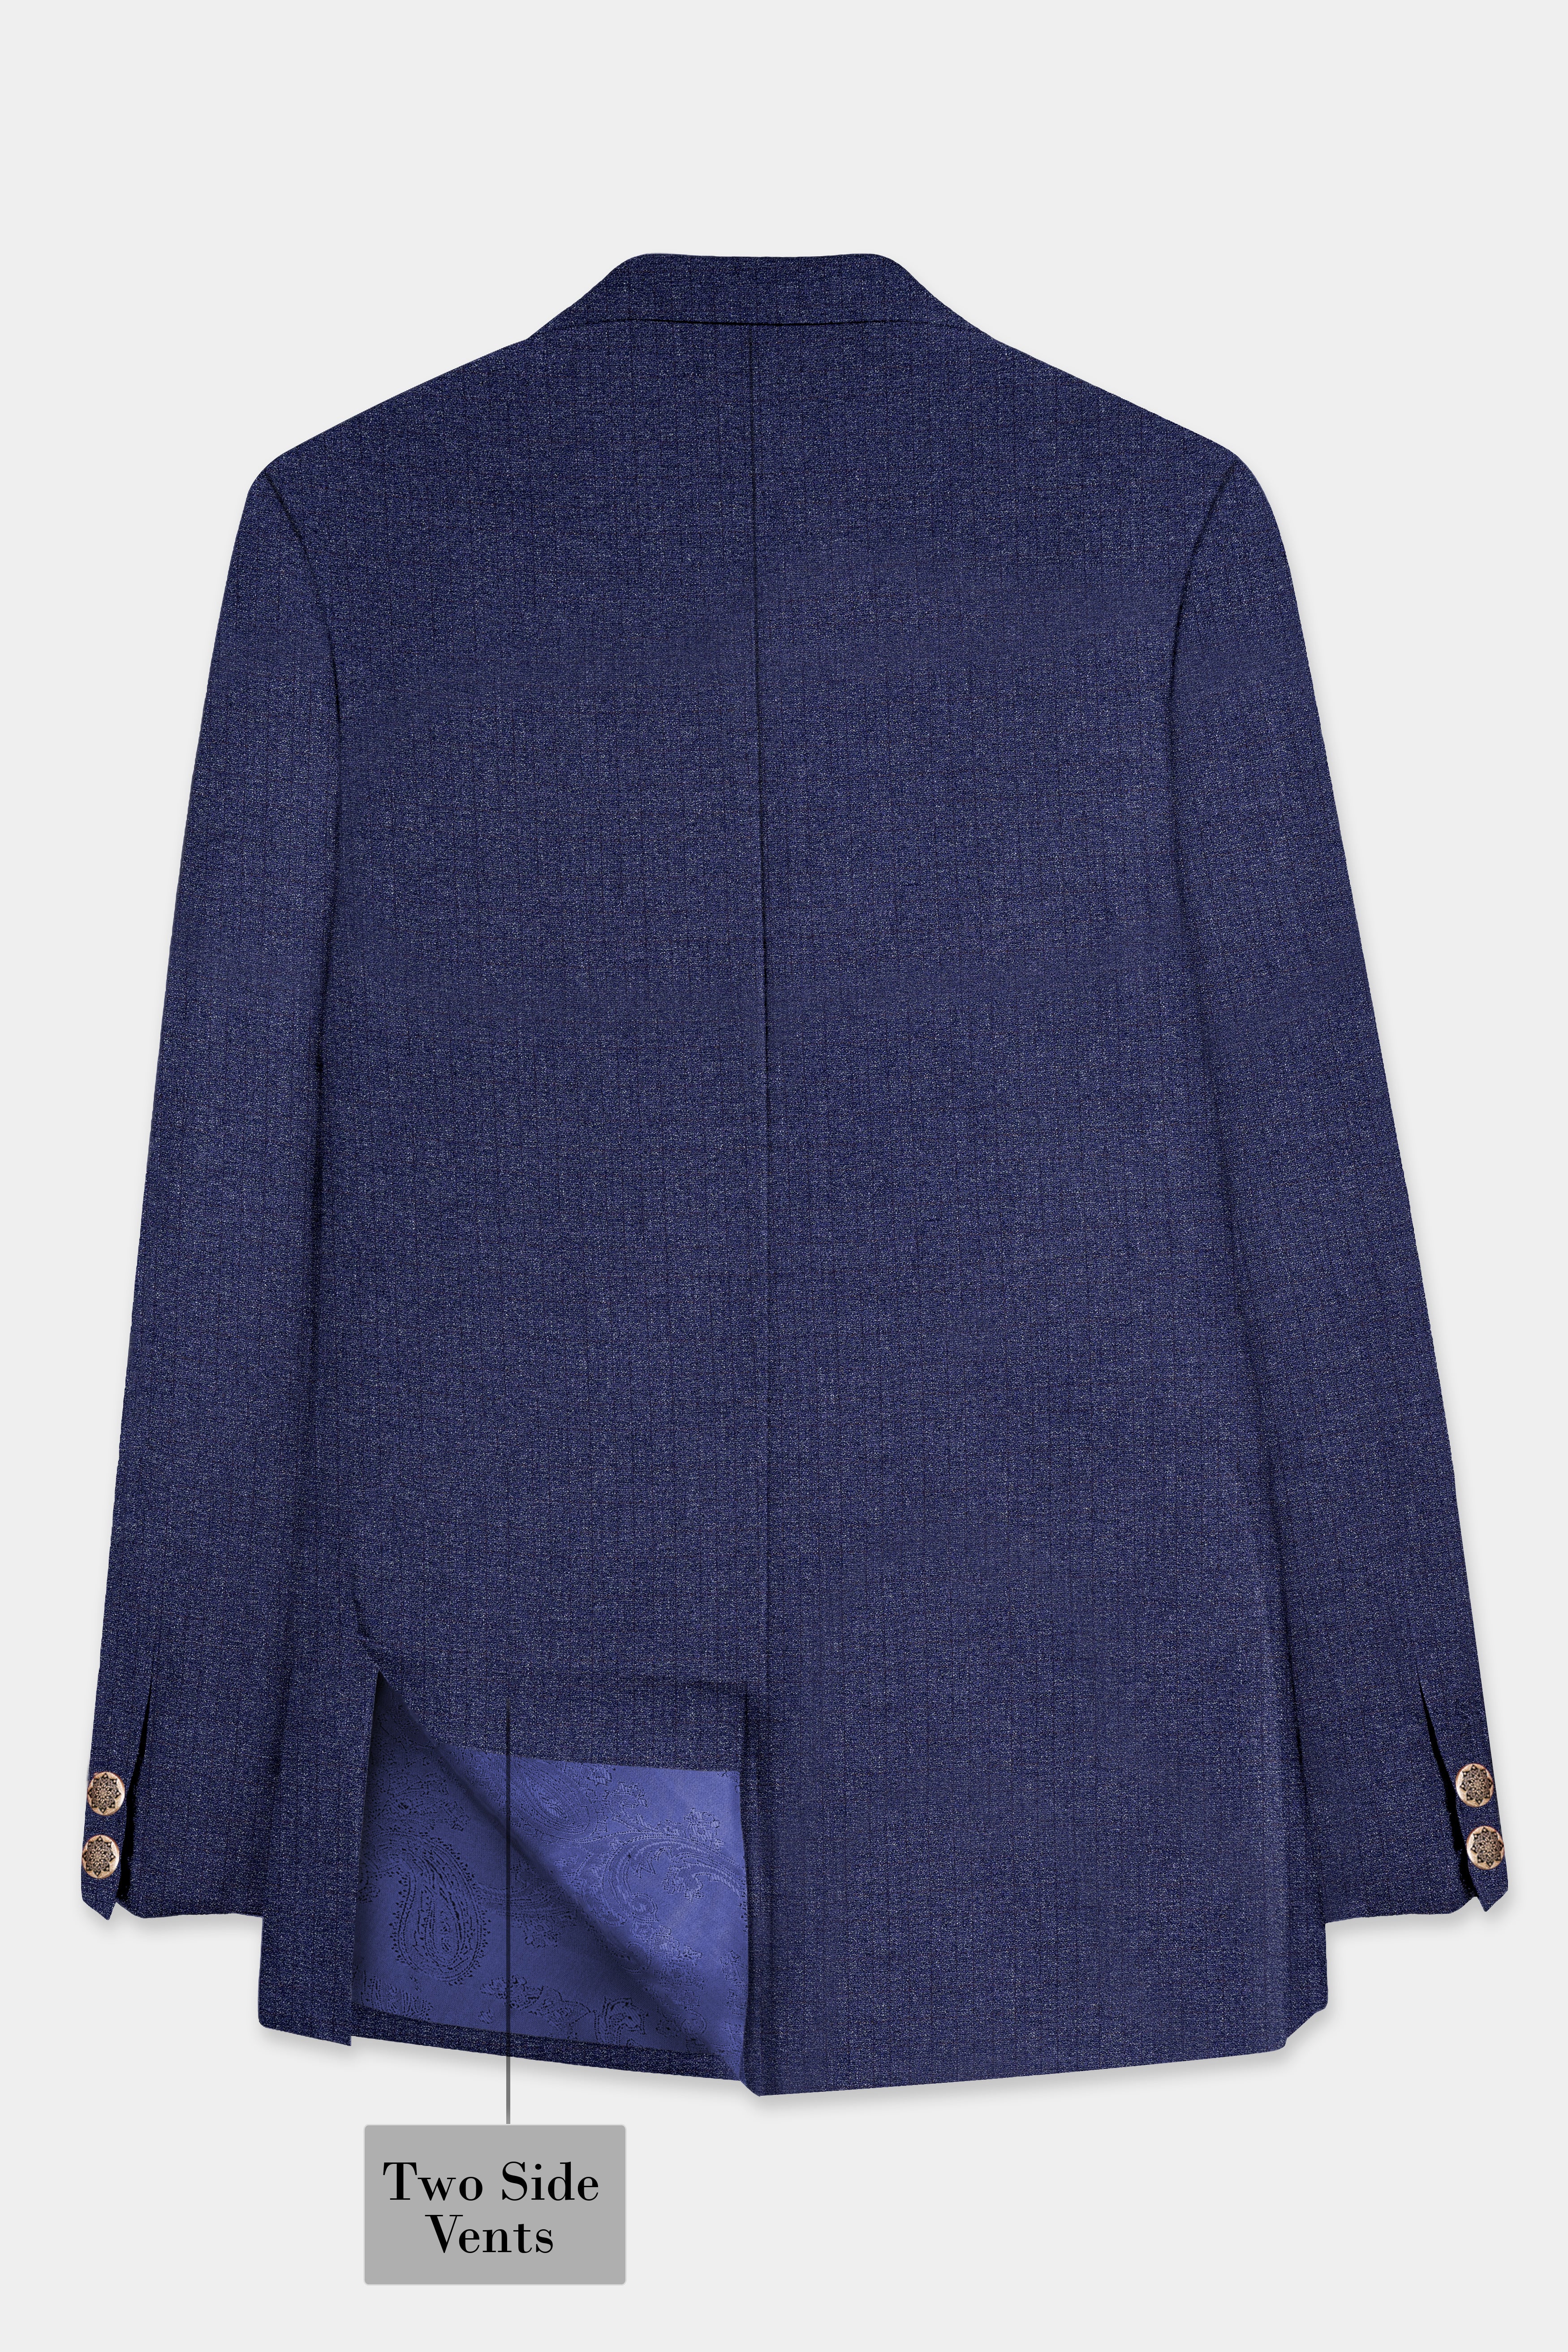 Ebony Clay Blue Textured Wool Blend Bandhgala Blazer